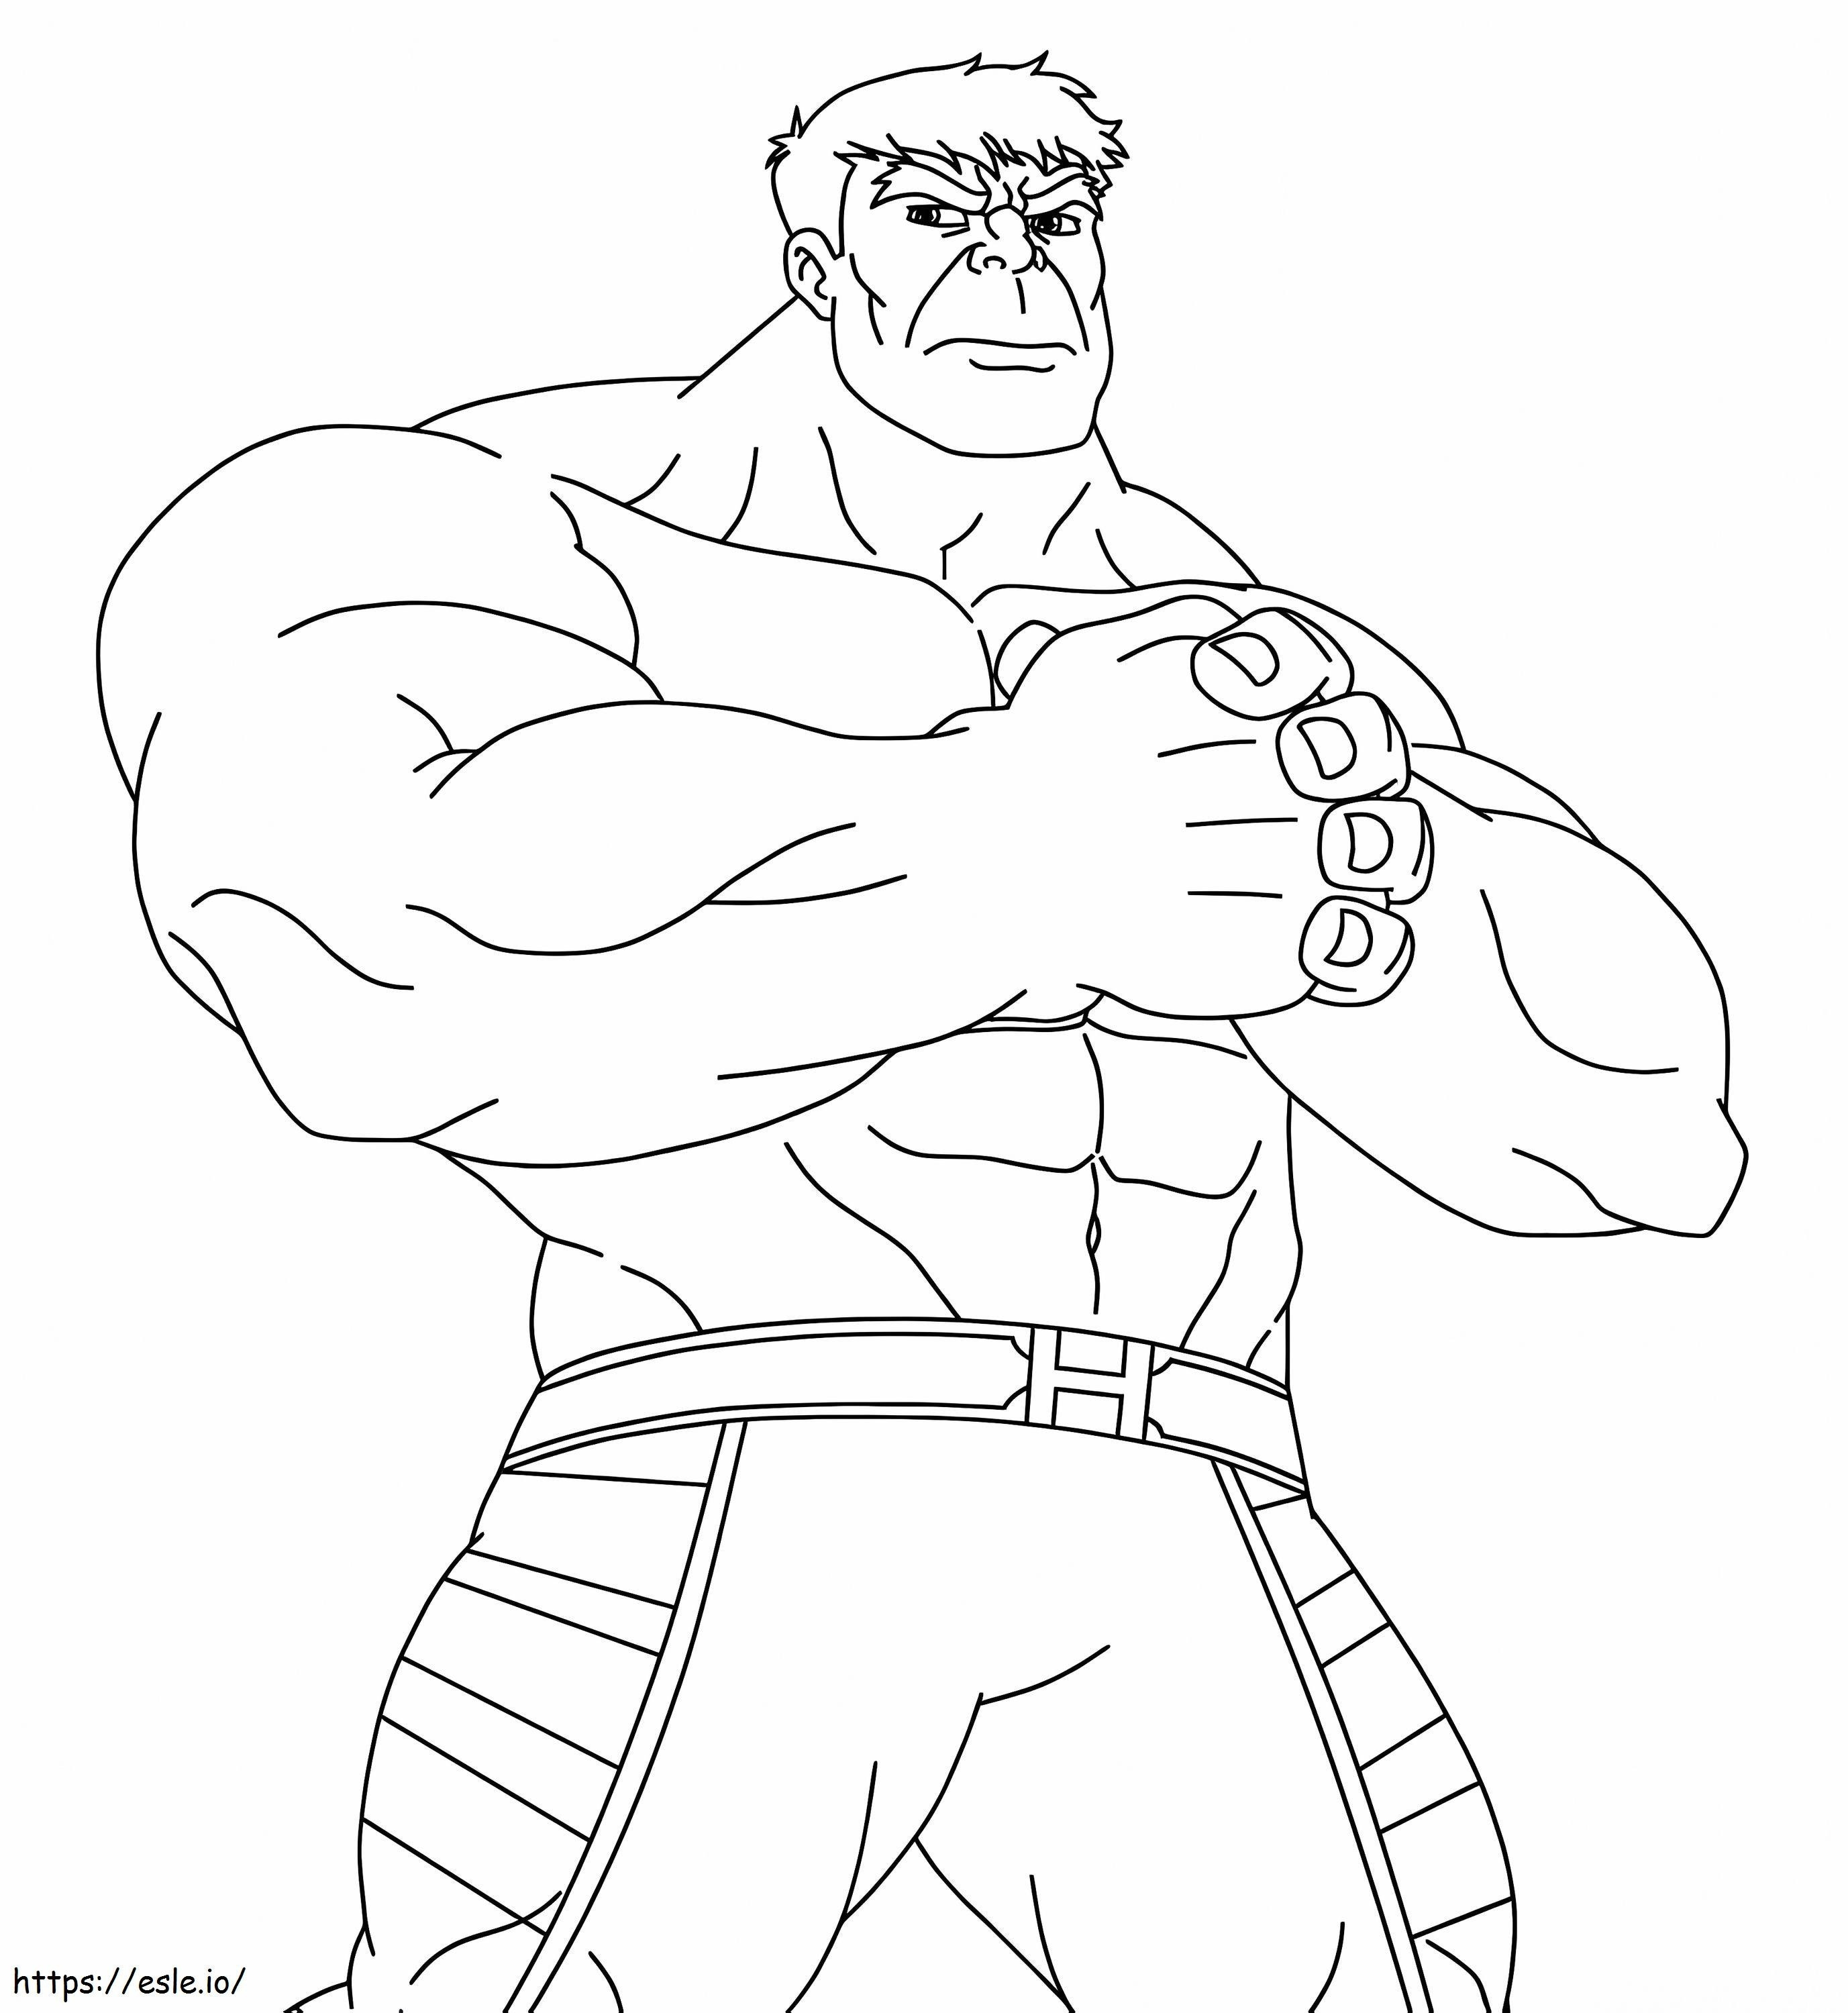 Hulk sudah siap Gambar Mewarnai